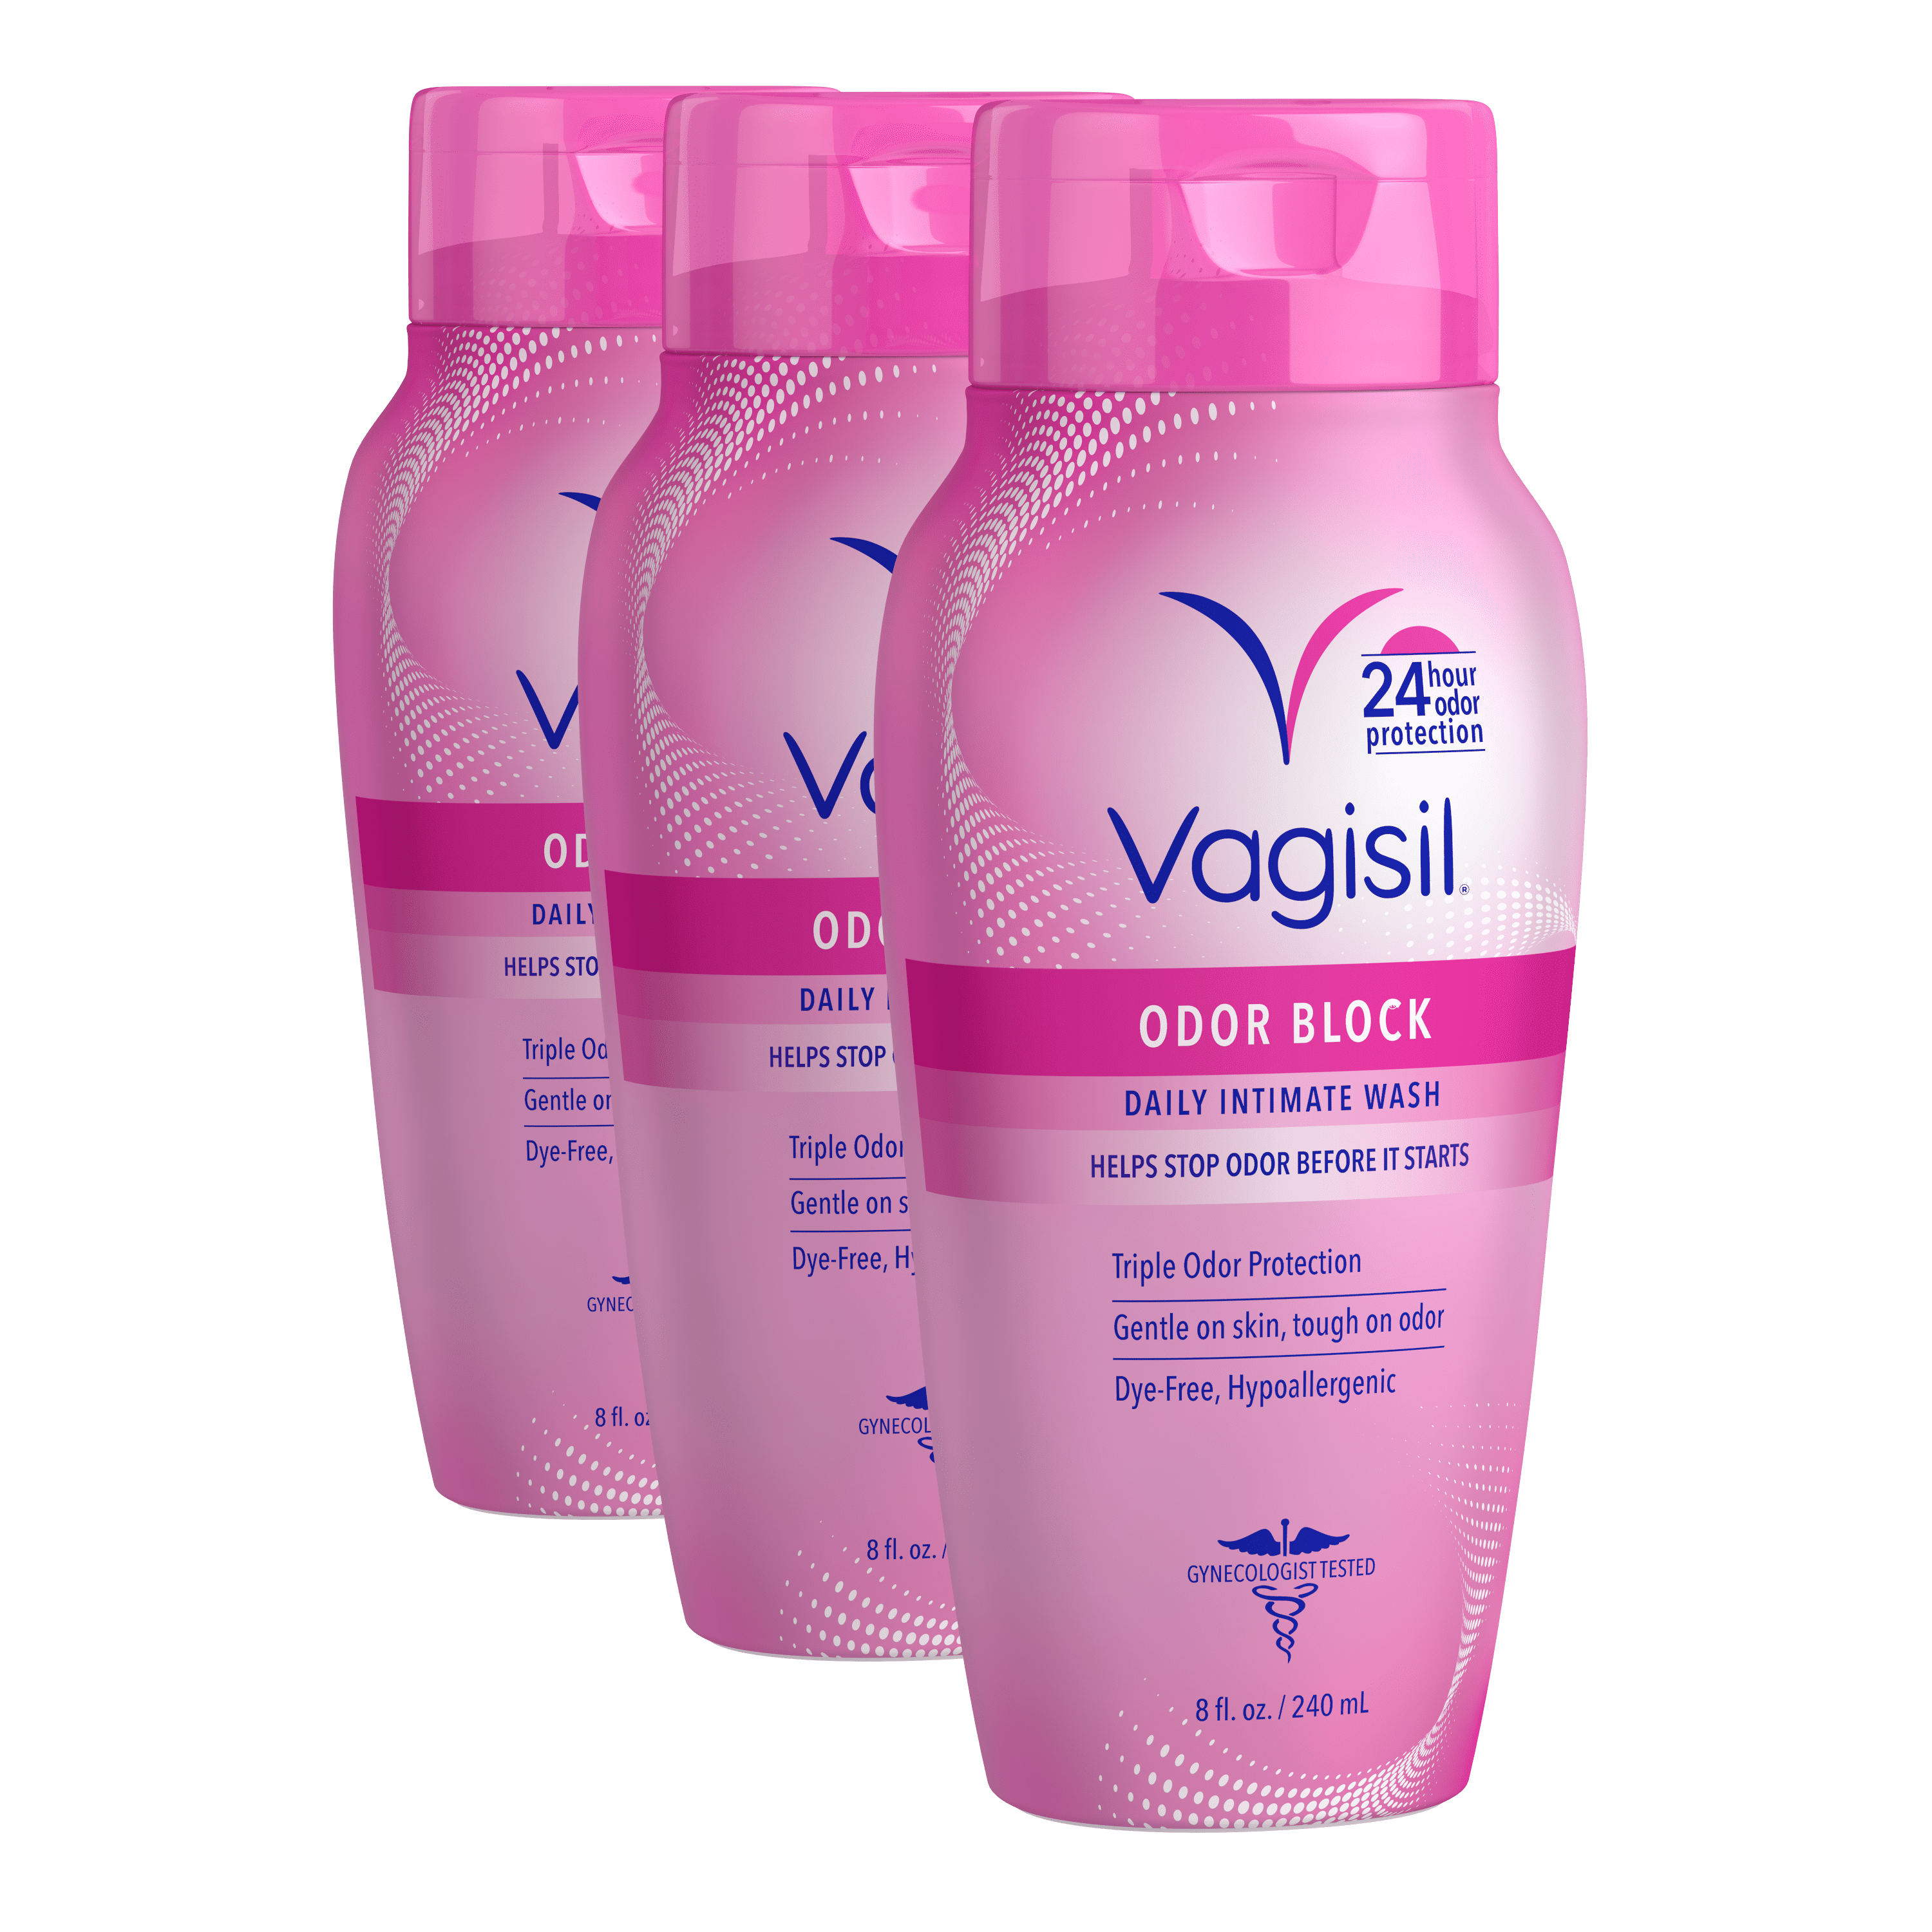 Zuidwest Intensief ventilatie Vagisil Odor Block Daily Intimate Vaginal Feminine Wash, 12 oz., 3 Pack -  Walmart.com